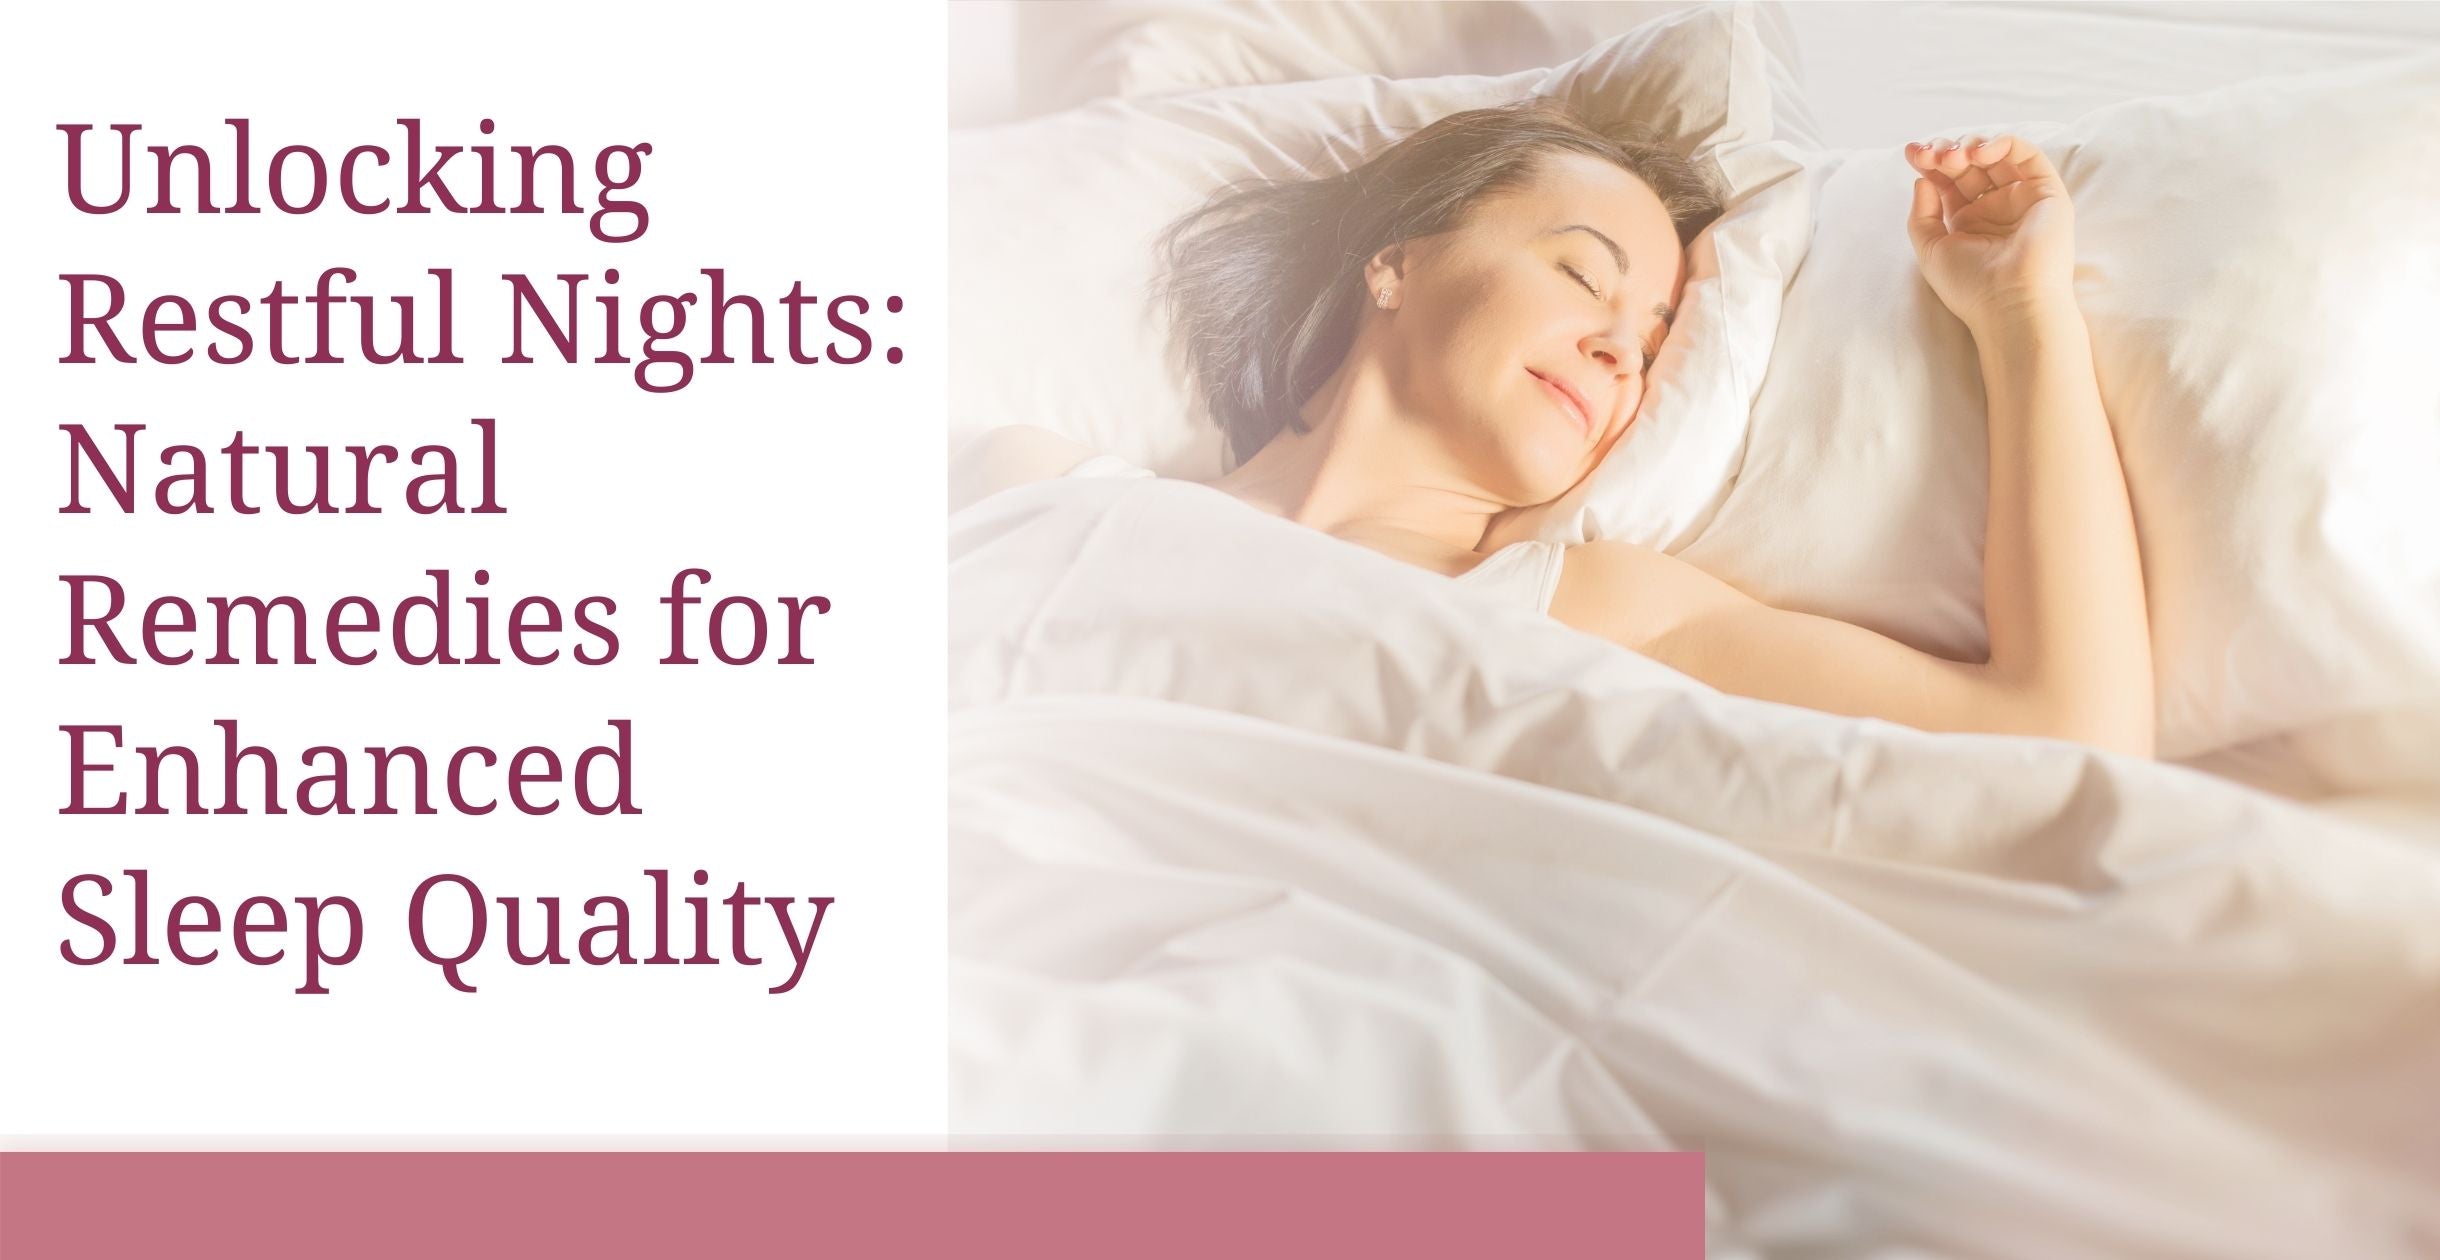 Unlocking Restful Nights: Natural Remedies for Enhanced Sleep Quality